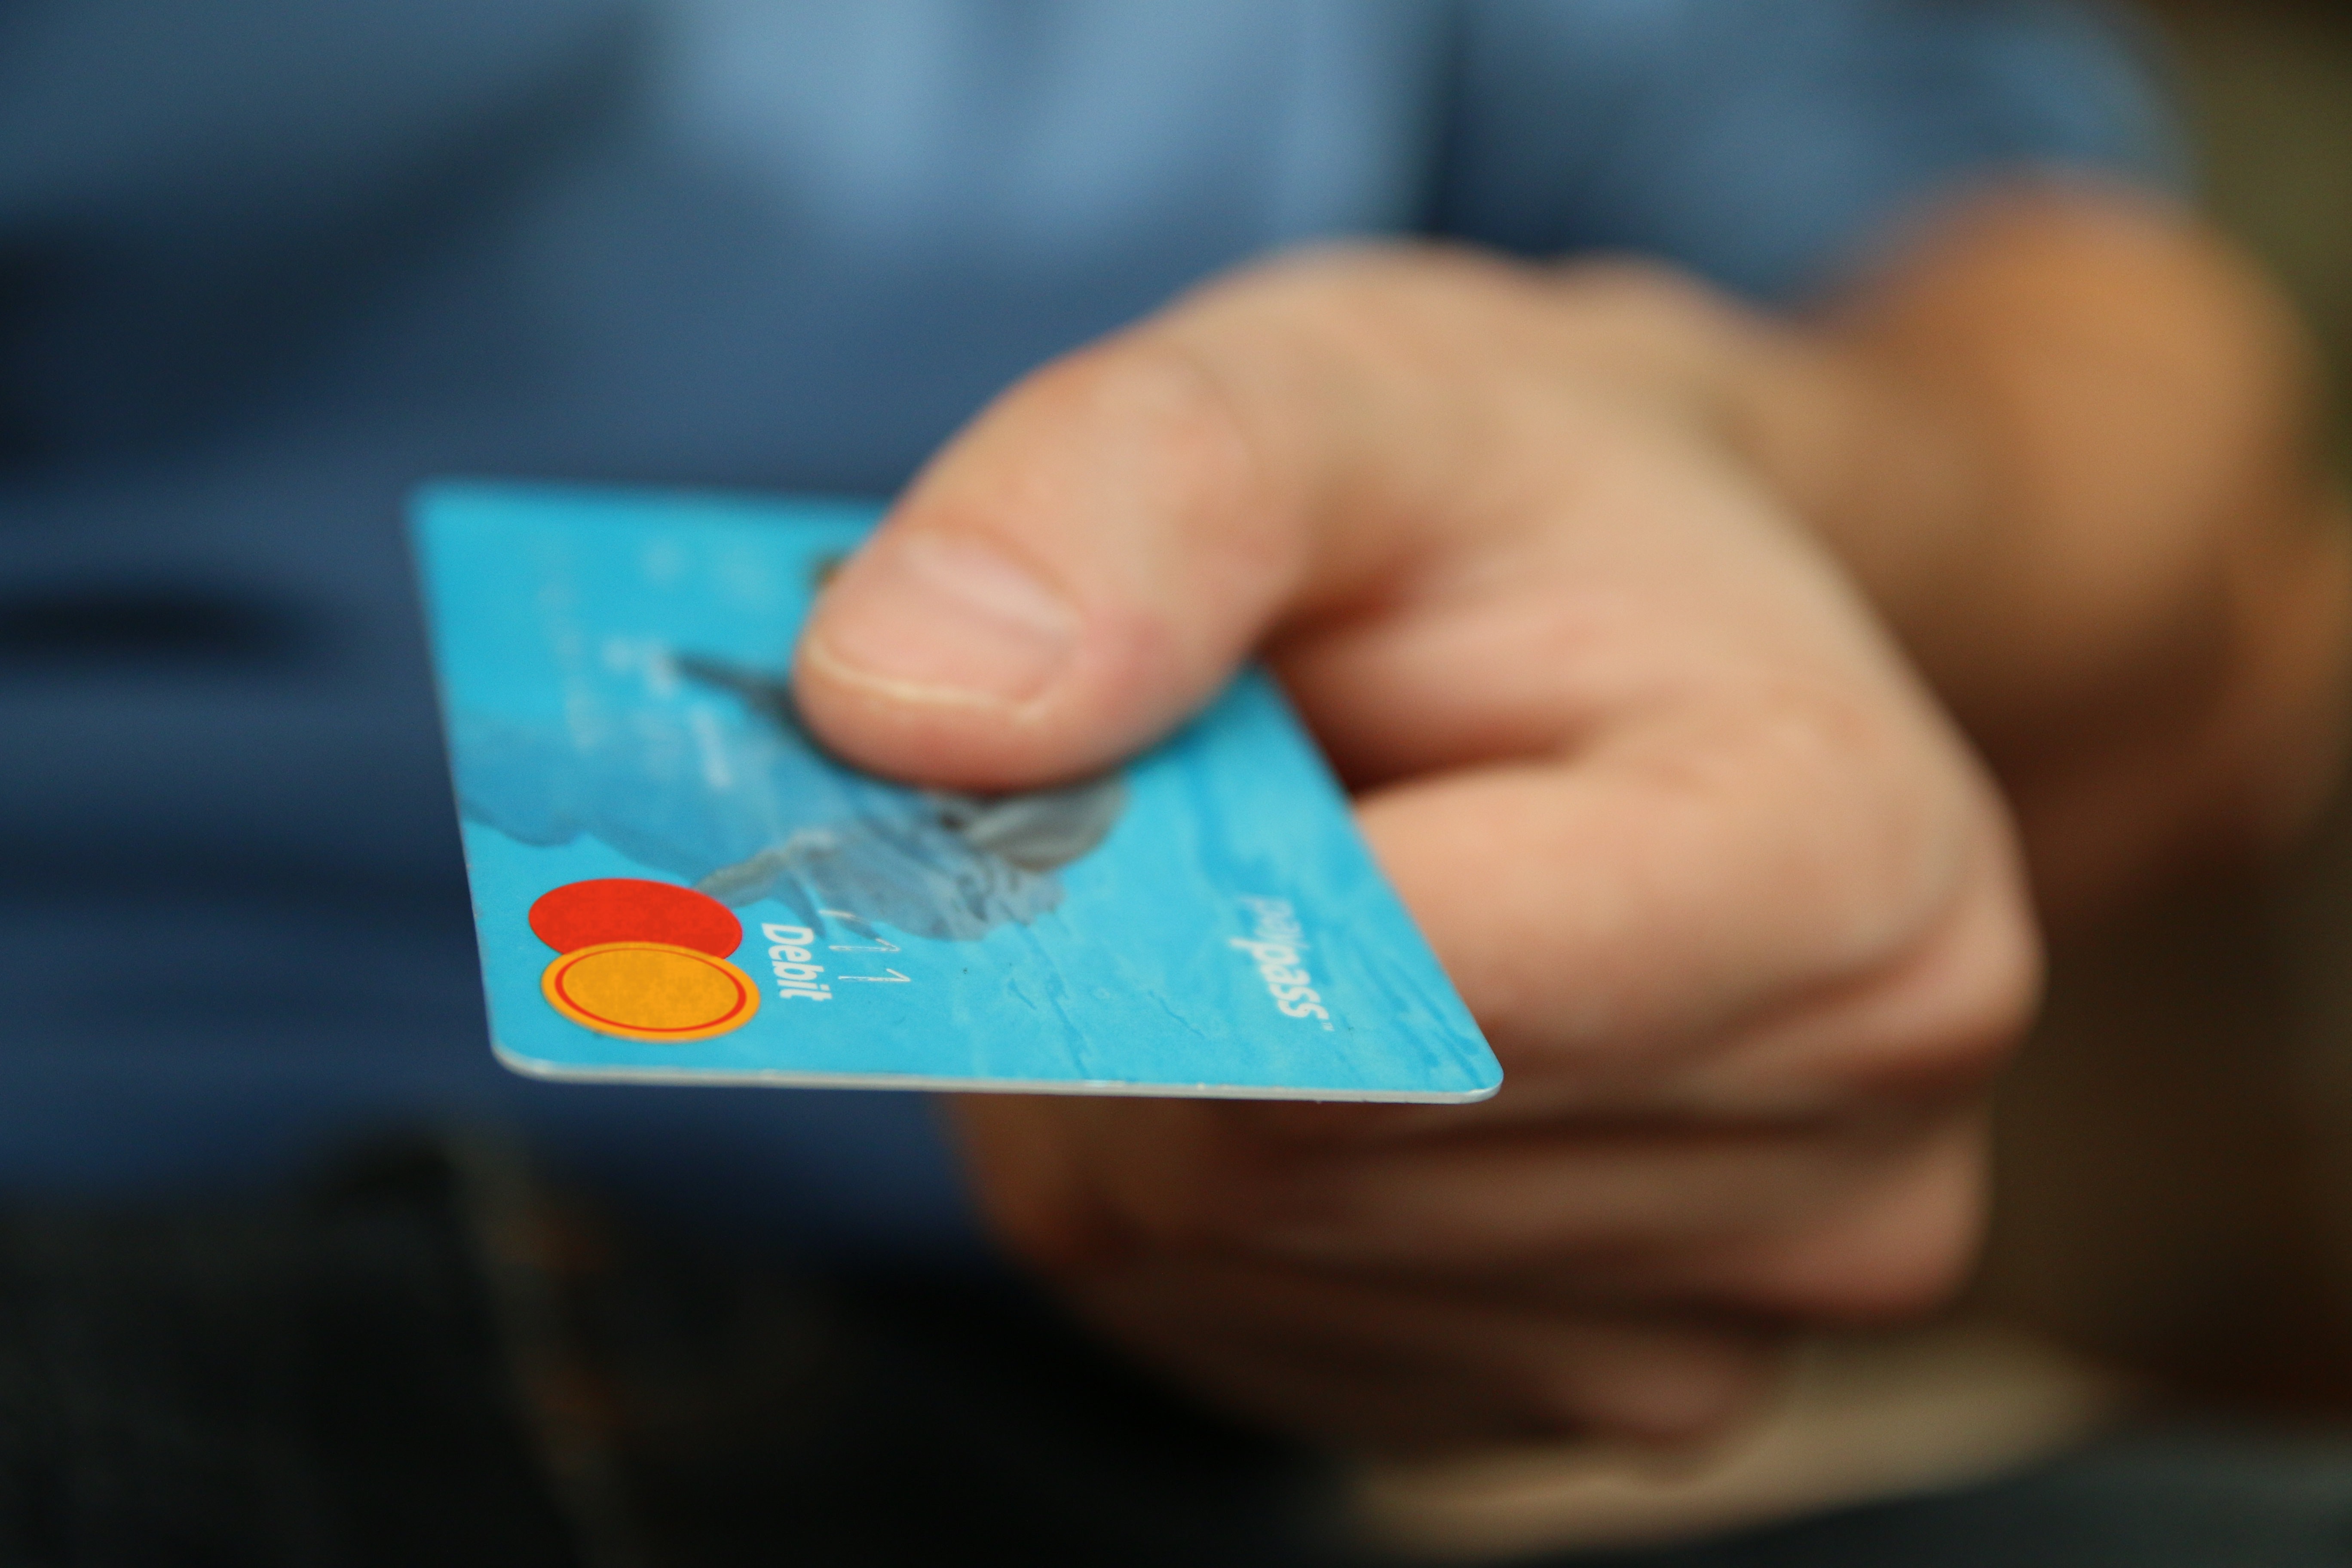 A person handing over a blue debit card. 